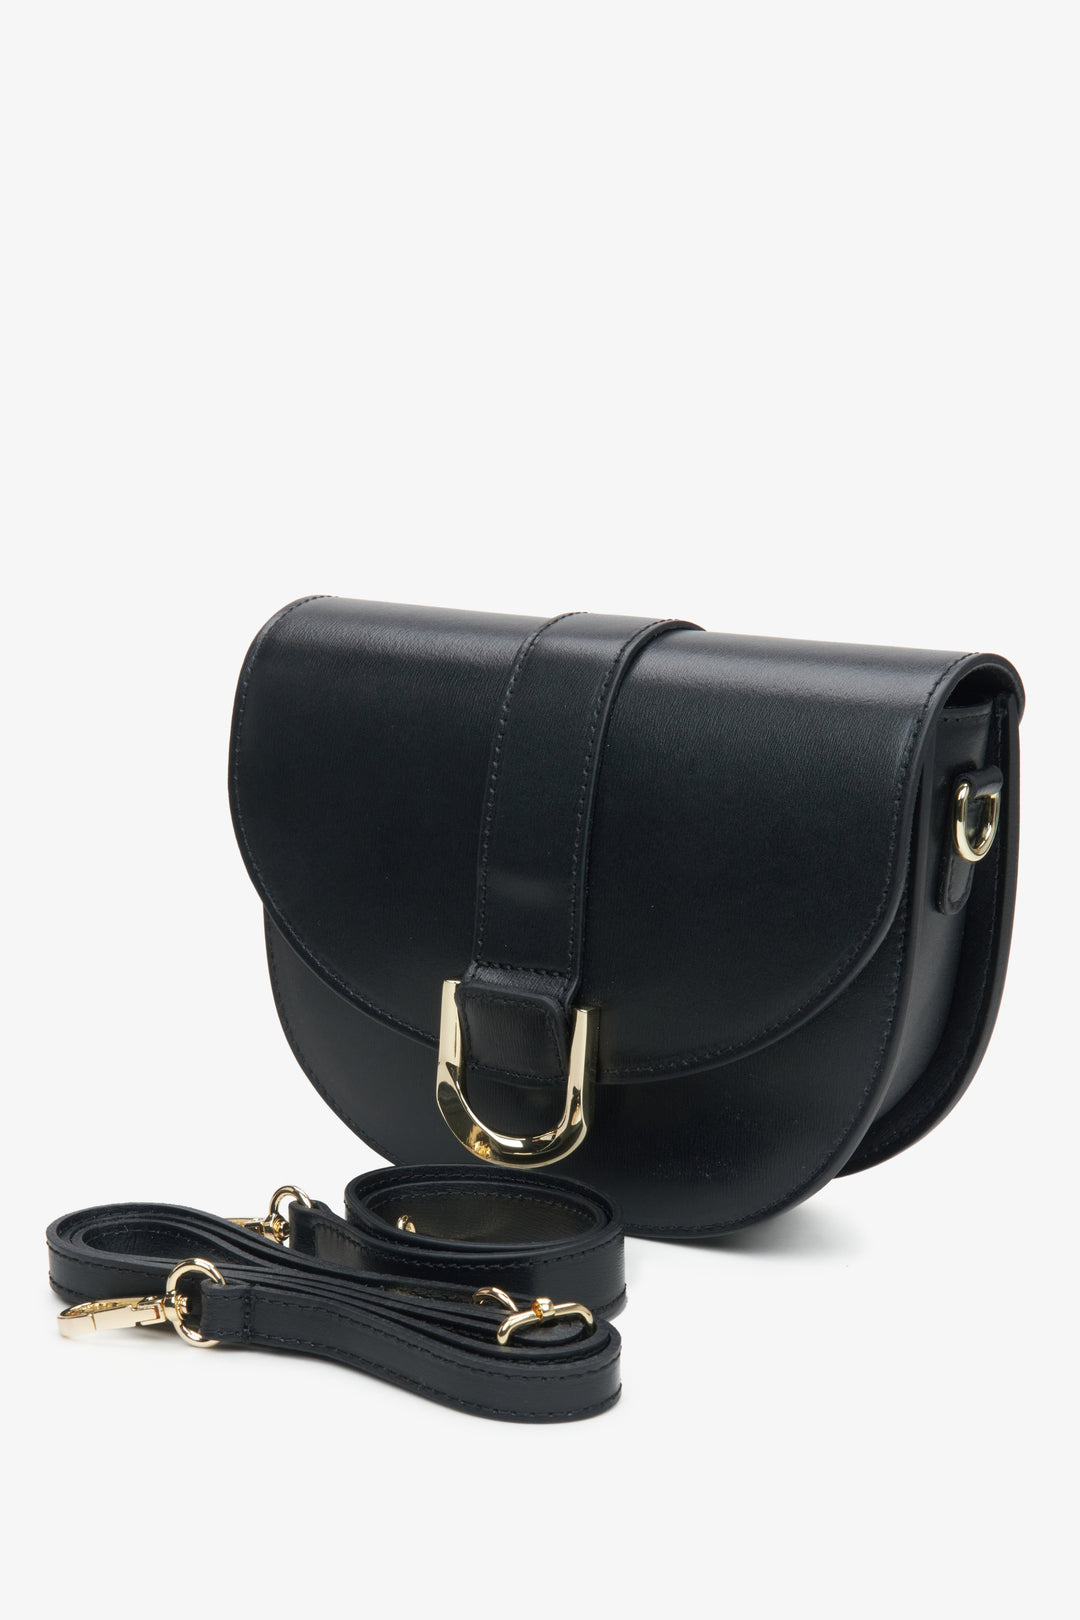 Estro women's black leather crescent-shaped handbag.